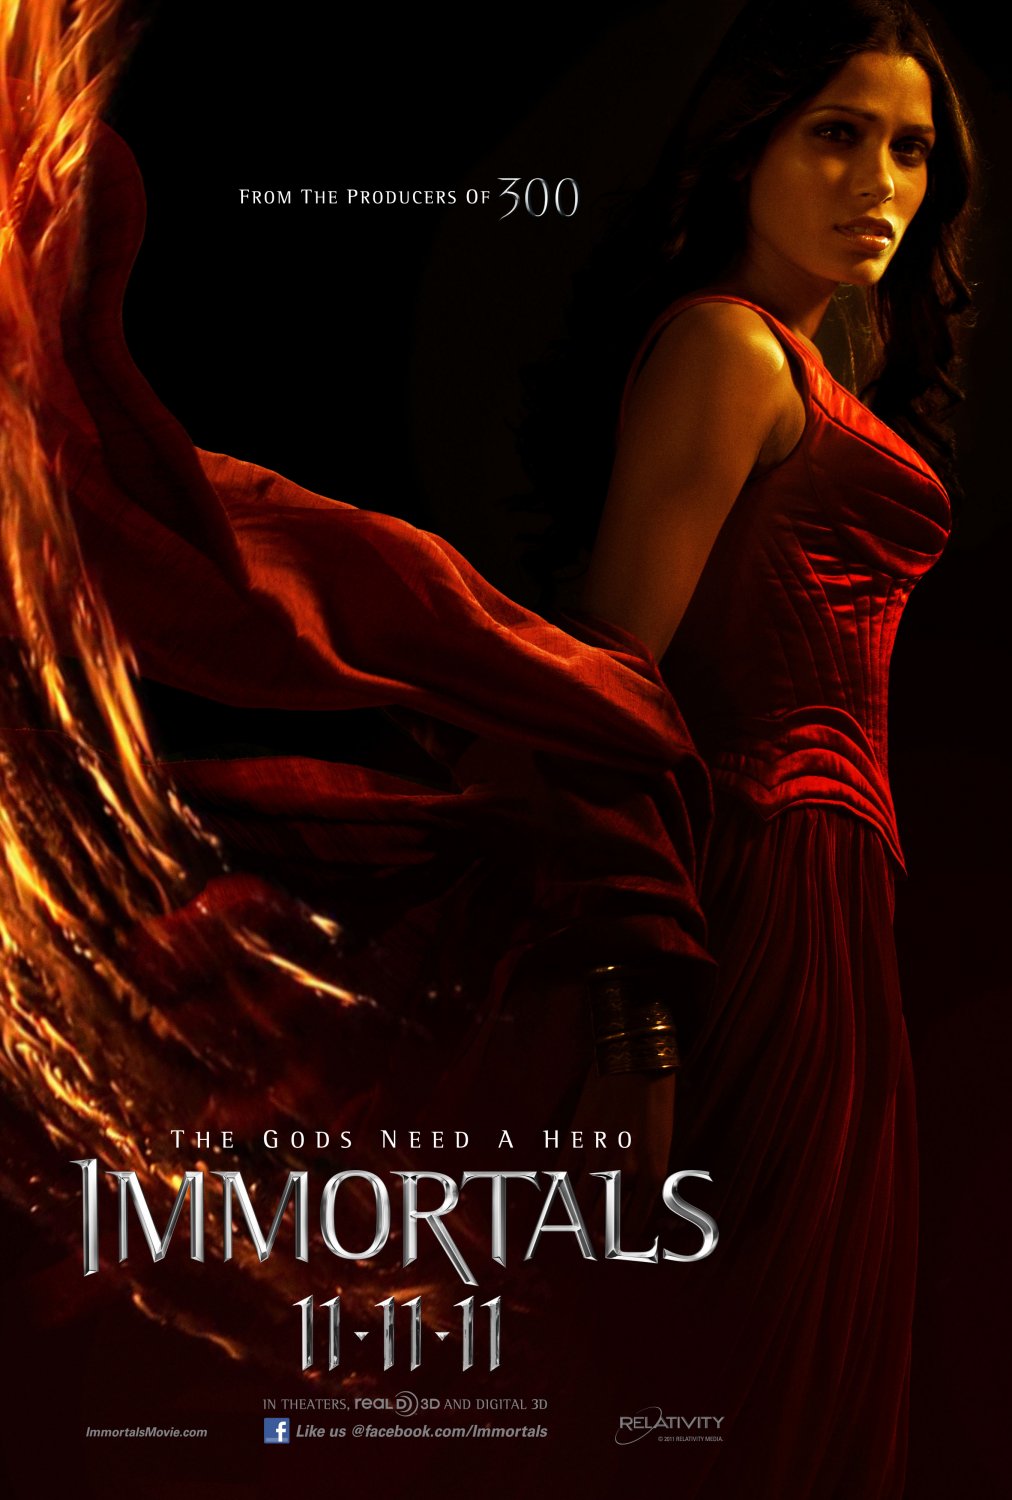 Immortals (2011) movie photo - ref id 53147